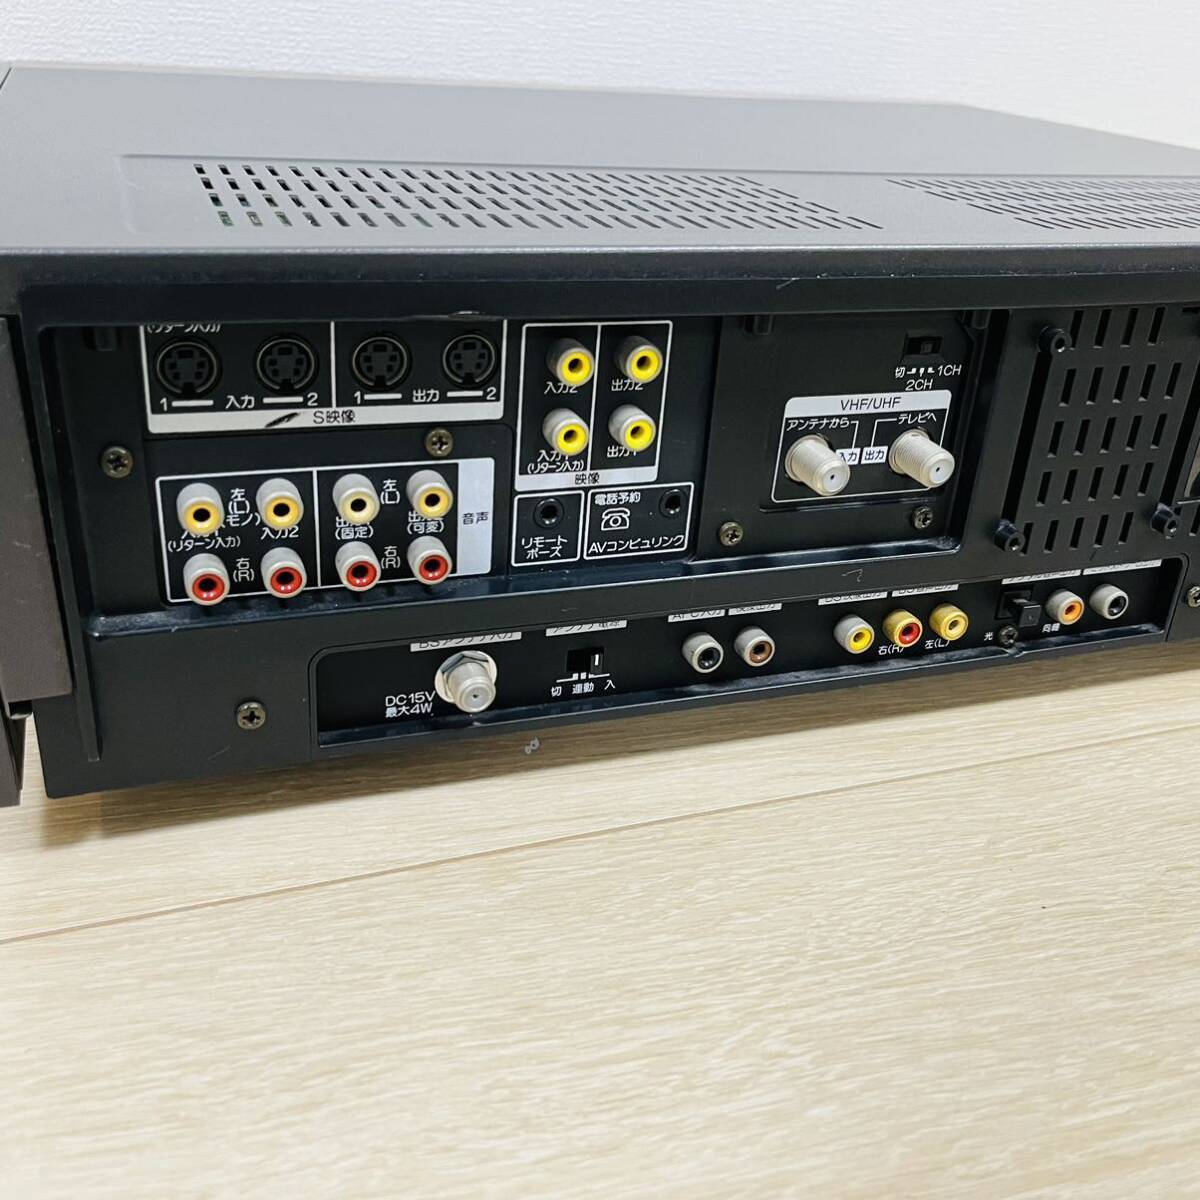 Victor ビクター ビデオ カセット レコーダー HR-S9800 S-VHS デッキ プレーヤー 映像機器_画像10